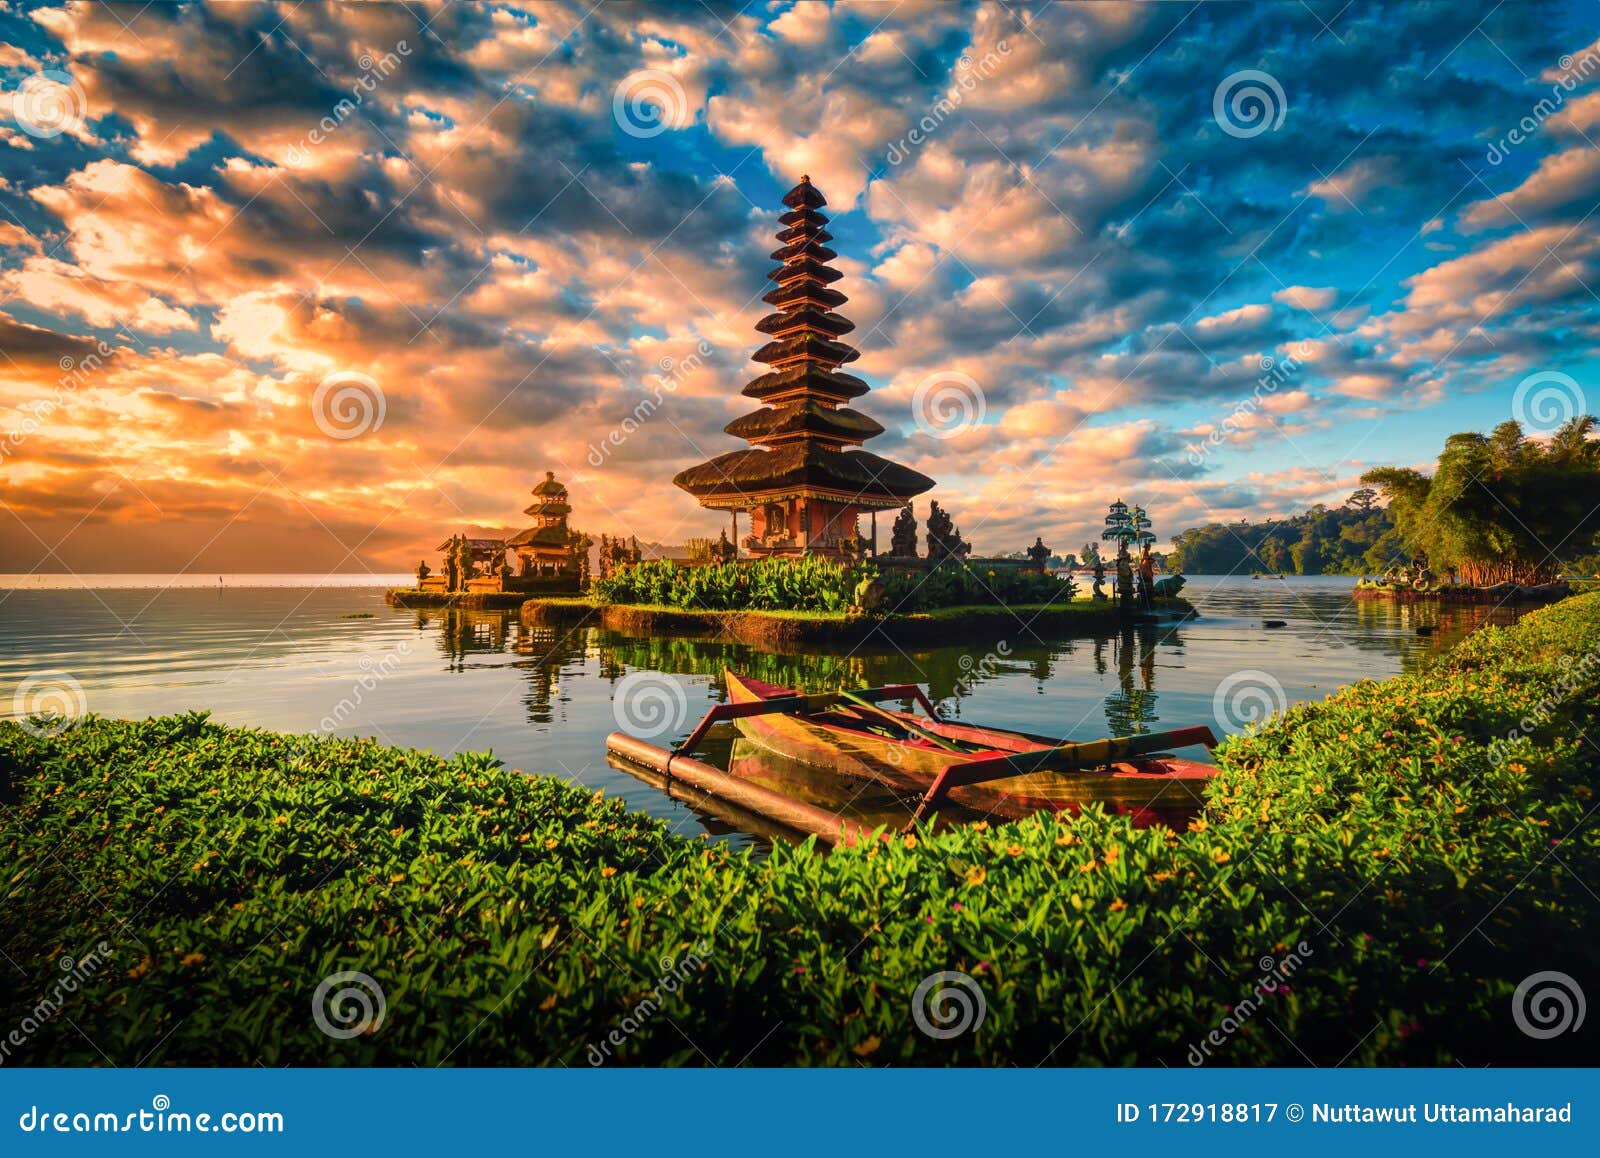 pura ulun danu bratan, hindu temple with boat on bratan lake landscape at sunrise in bali, indonesia